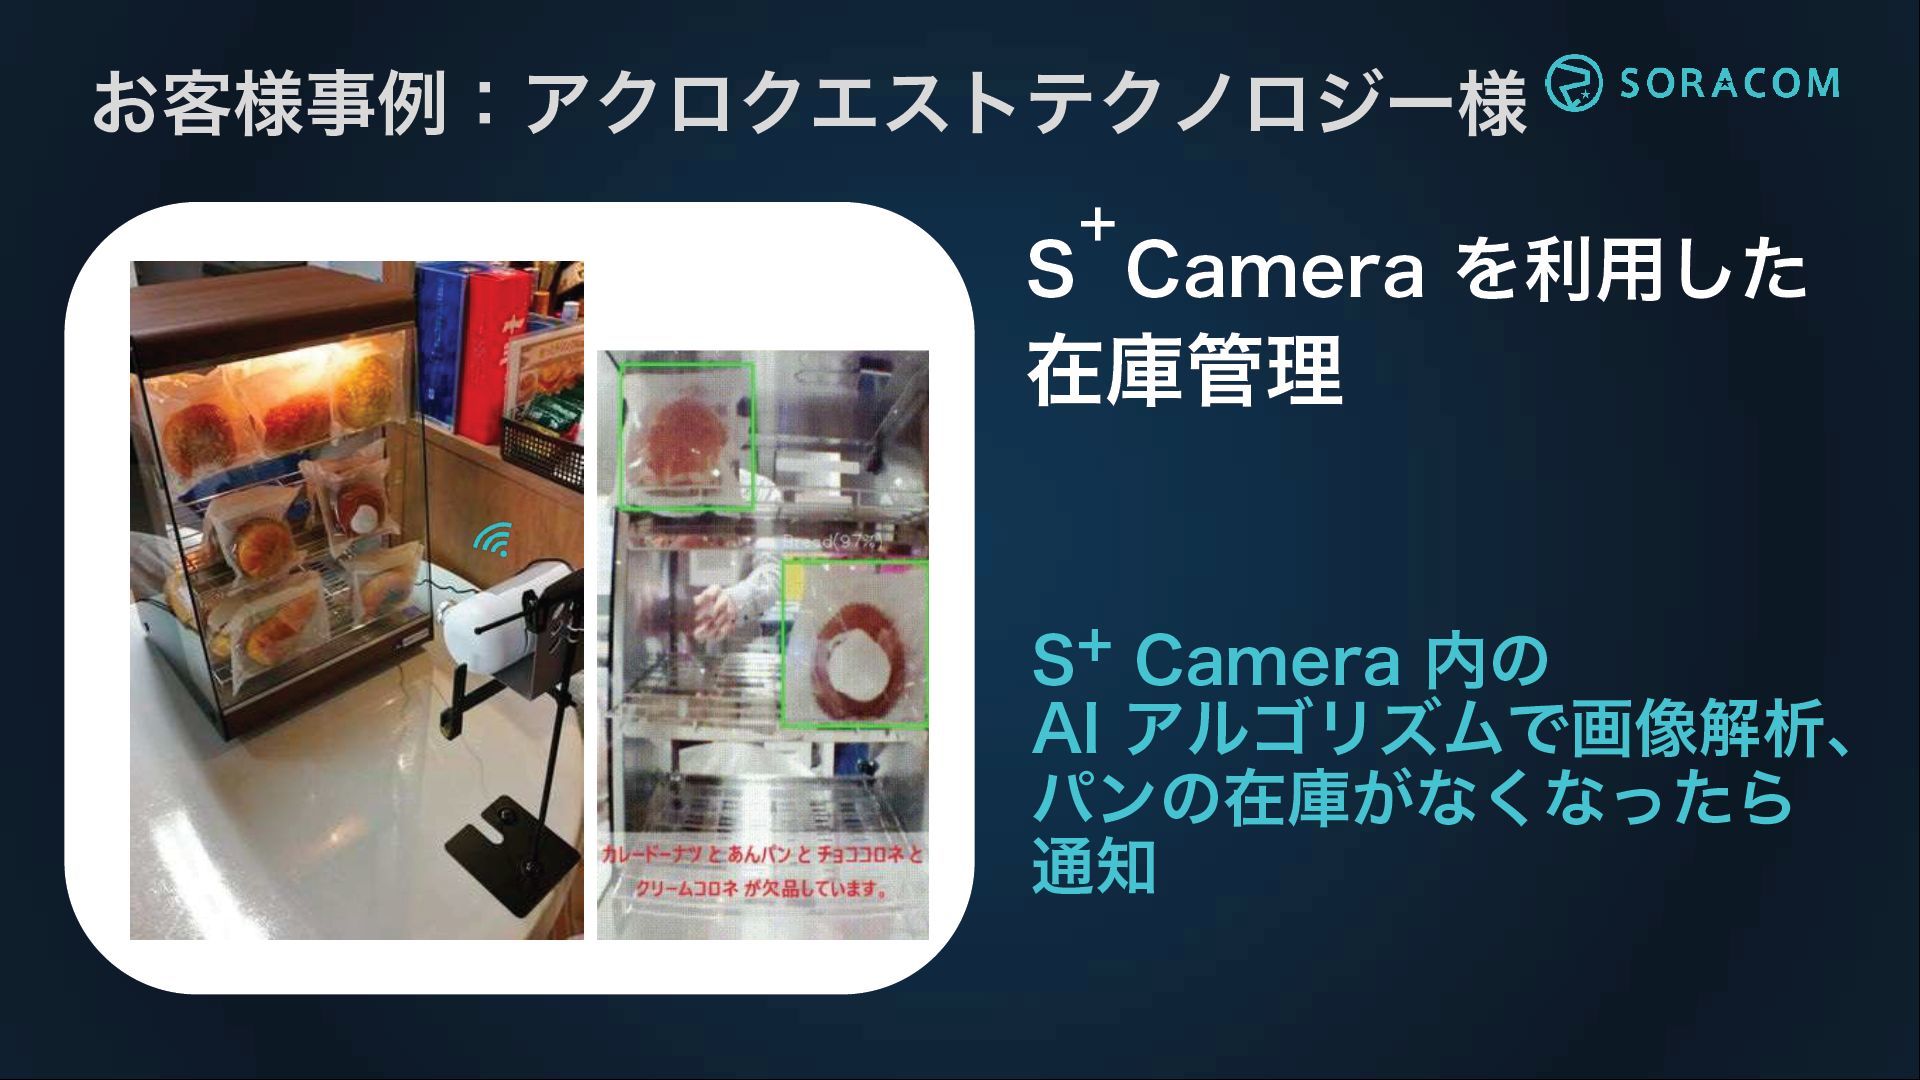 S+ Camera BasicSORACOM Mosaic̓mNbNĊgnoTF\R